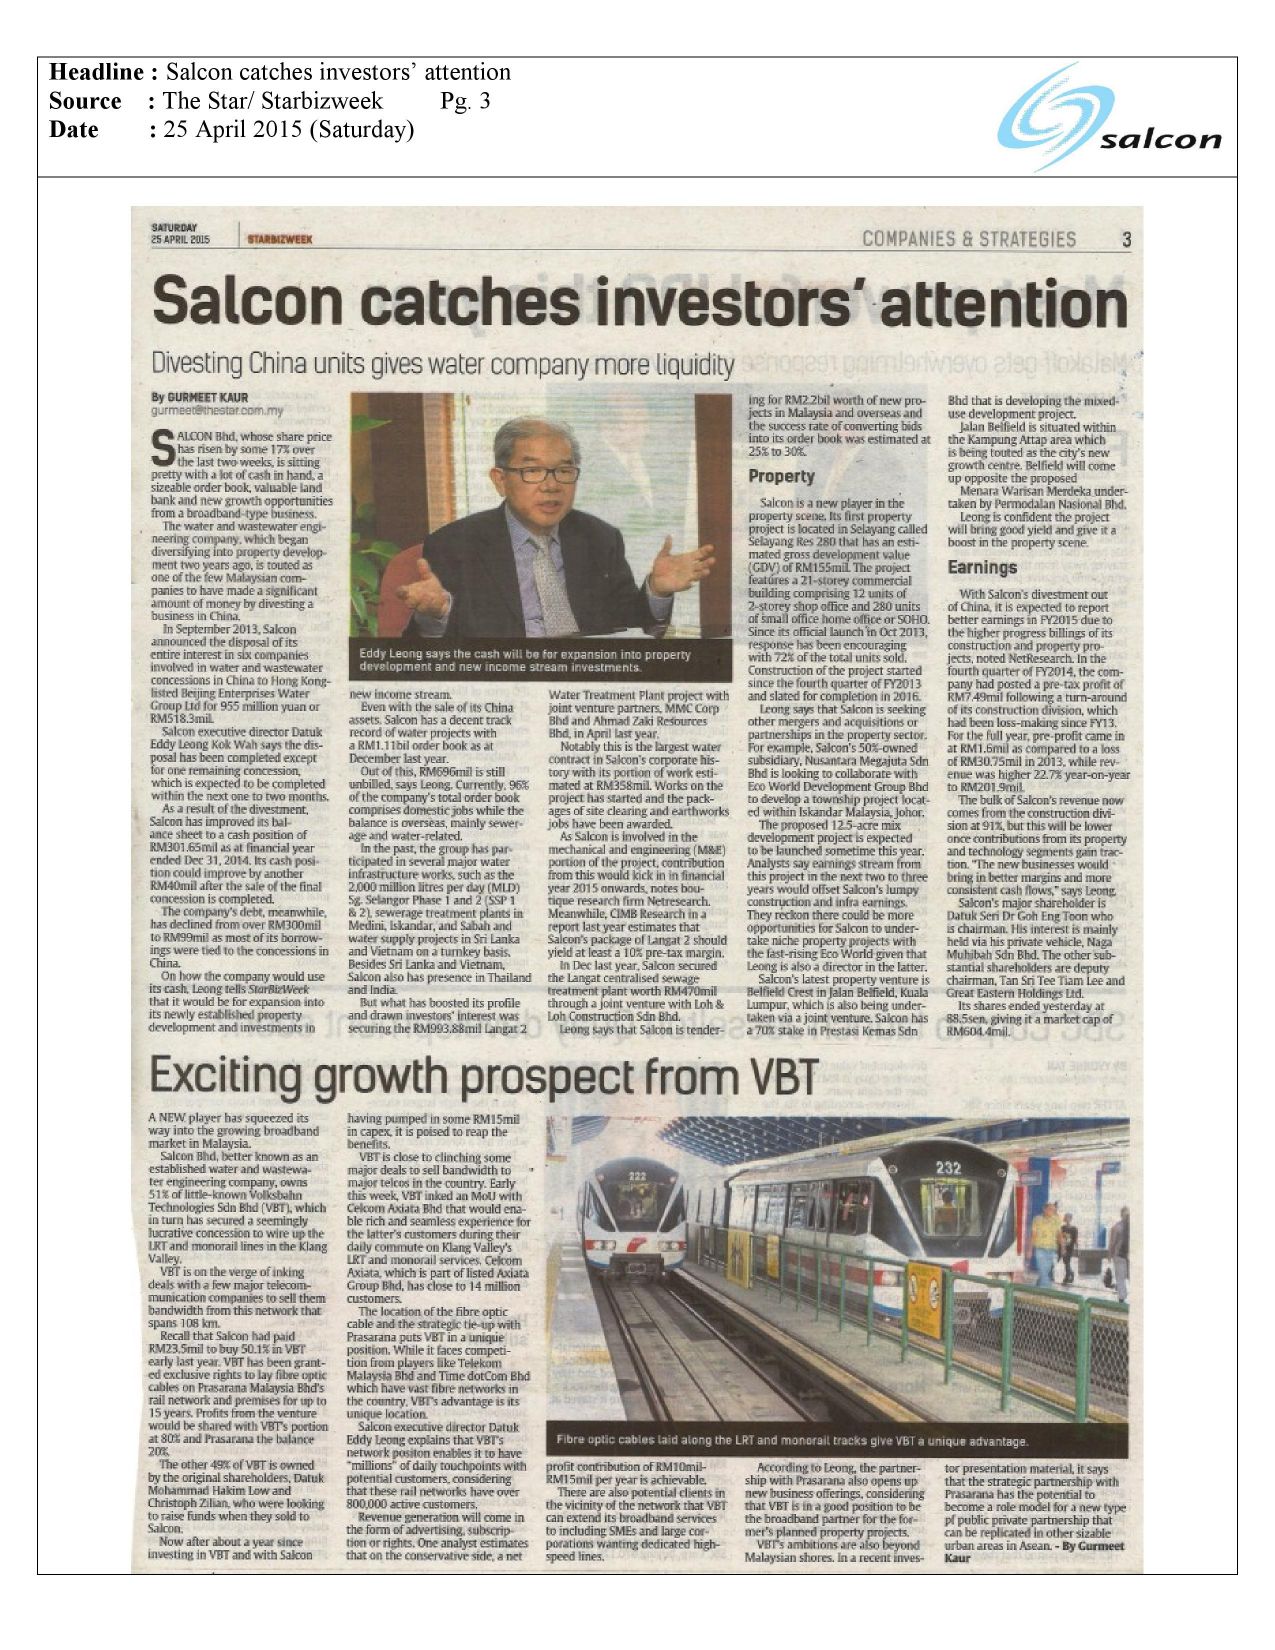 Salcon catches investors’ attention